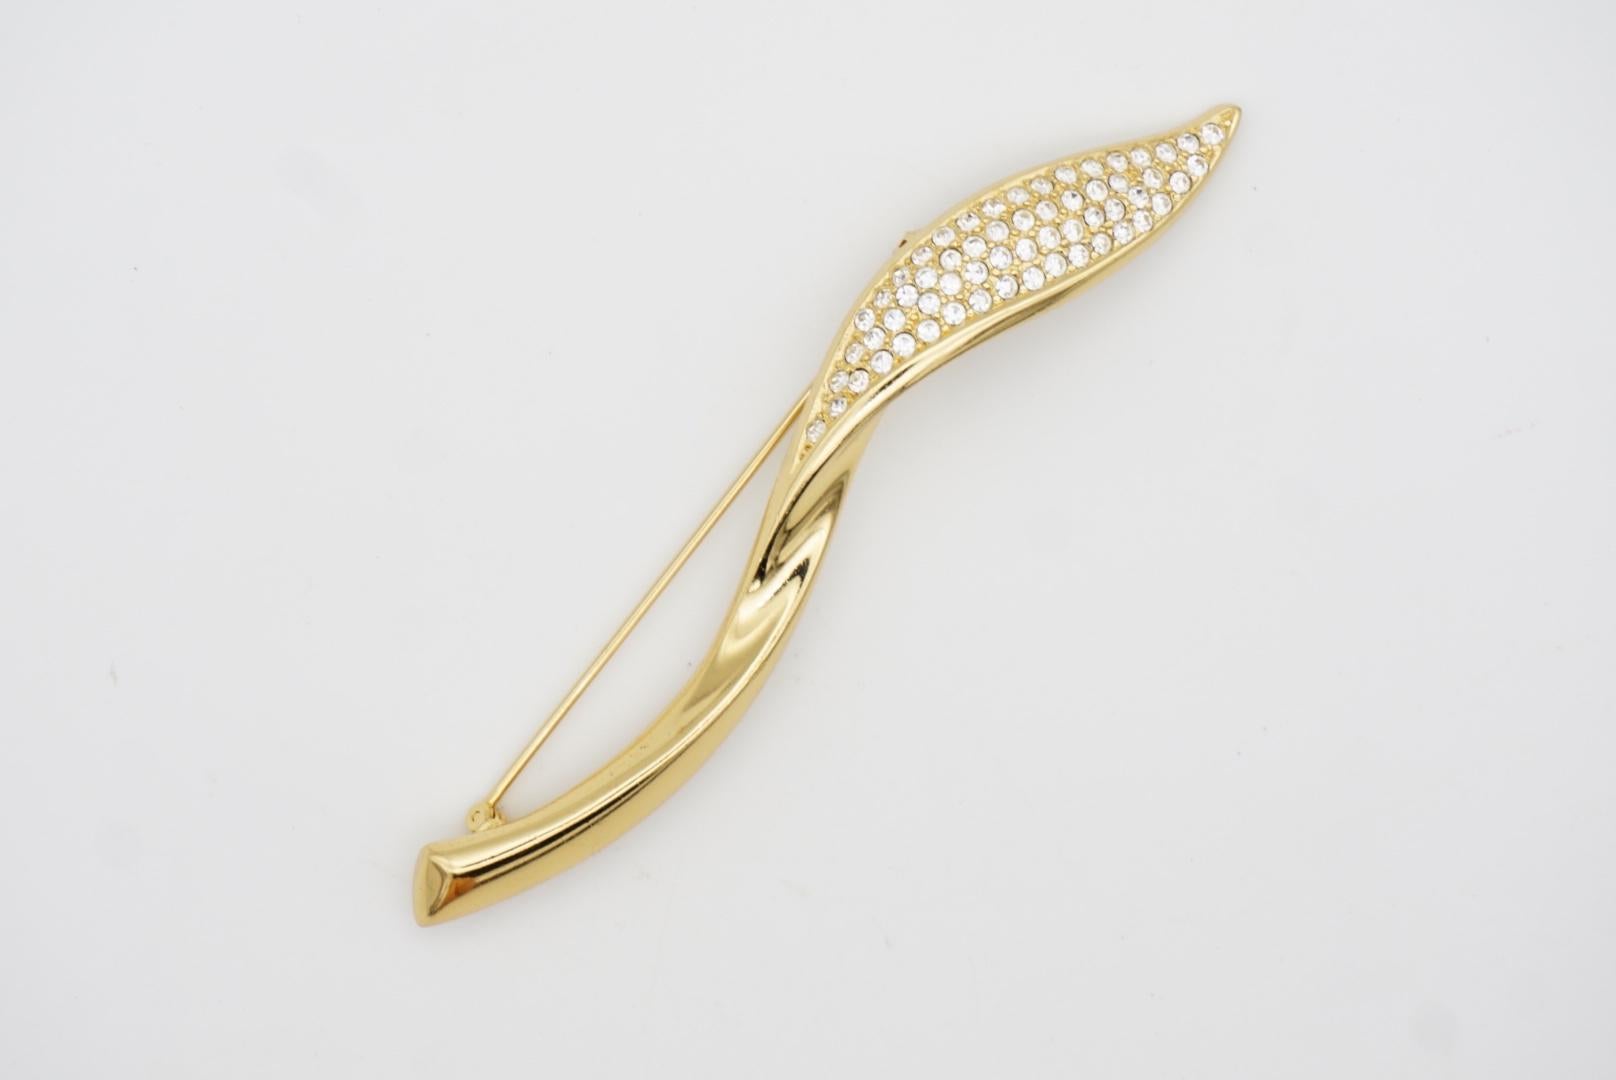 Christian Dior 1970s Vintage Large Long Swirl Leaf Flame Crystals Gold Brooch For Sale 2